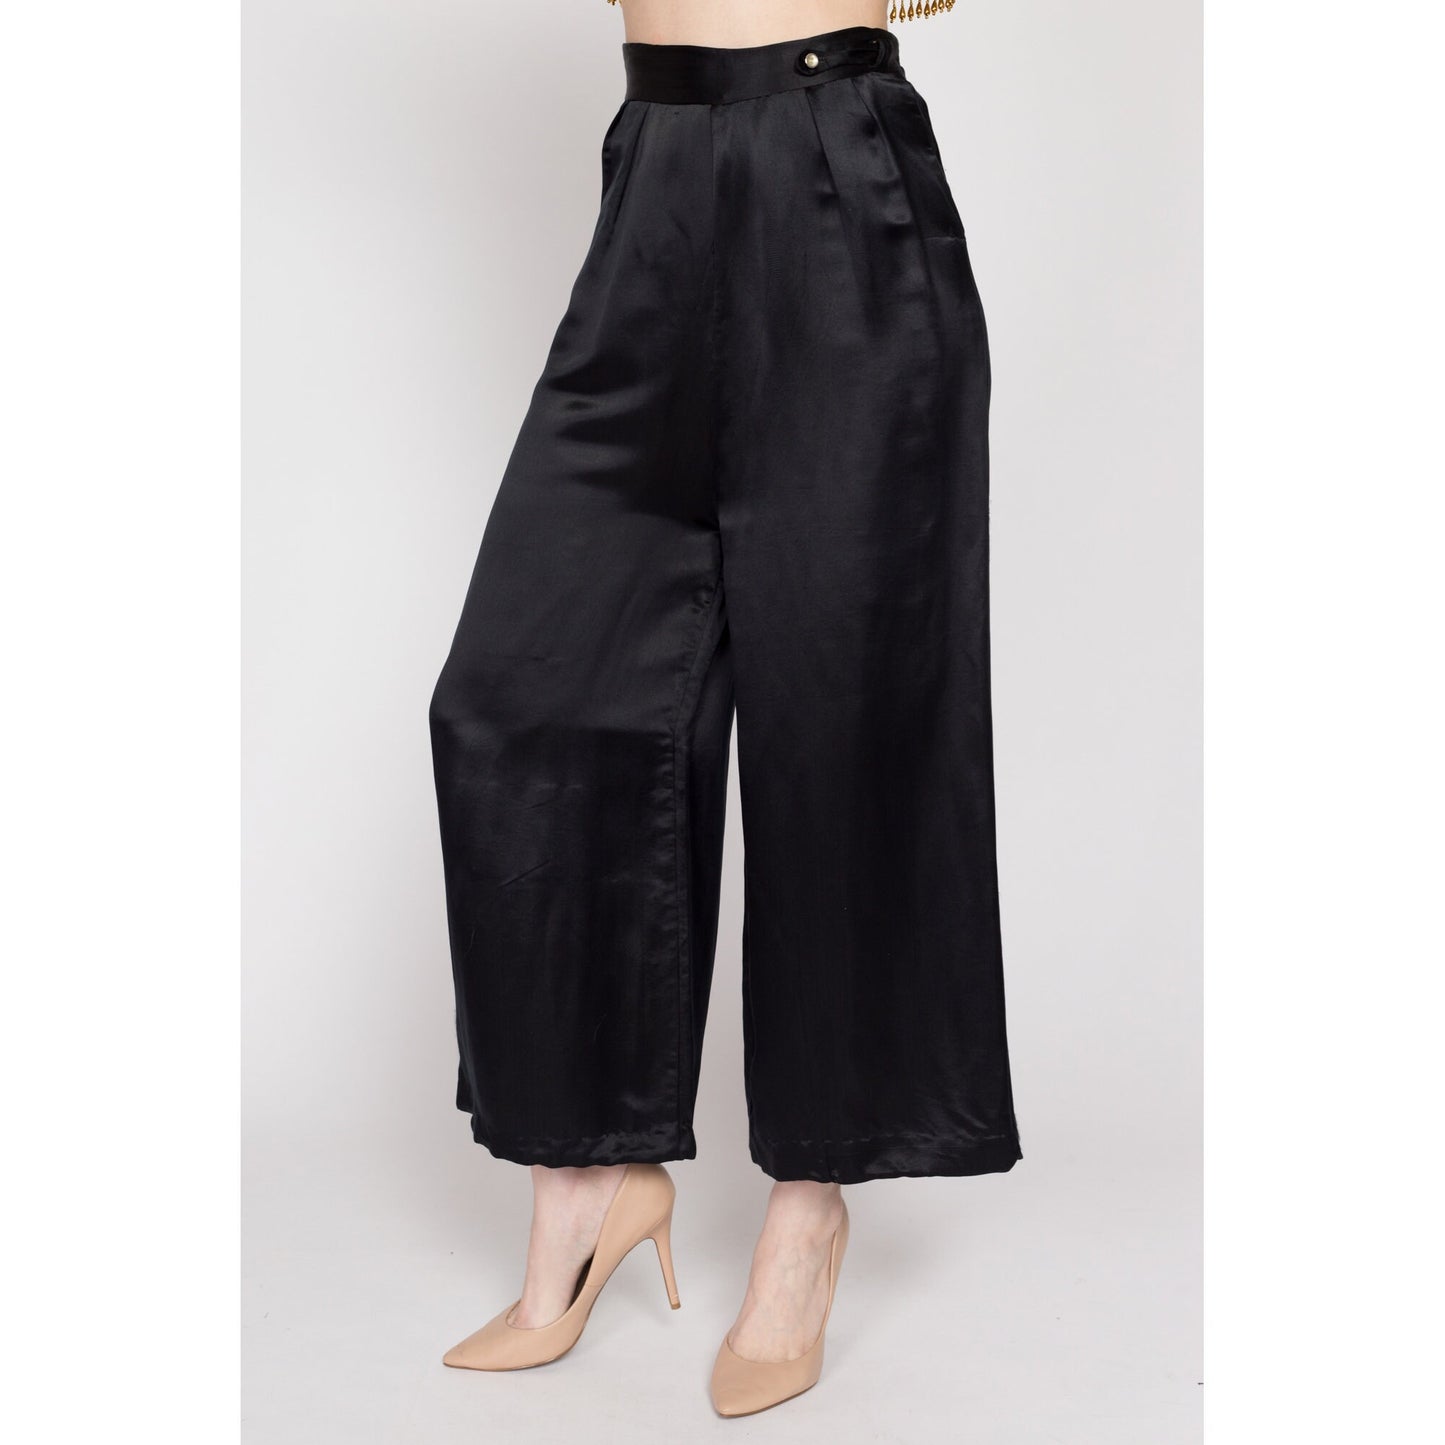 Small 1930s Black Satin Wide Leg Lounge Pants 26" | Vintage 30s Beach Pajamas High Waisted Palazzo Trousers